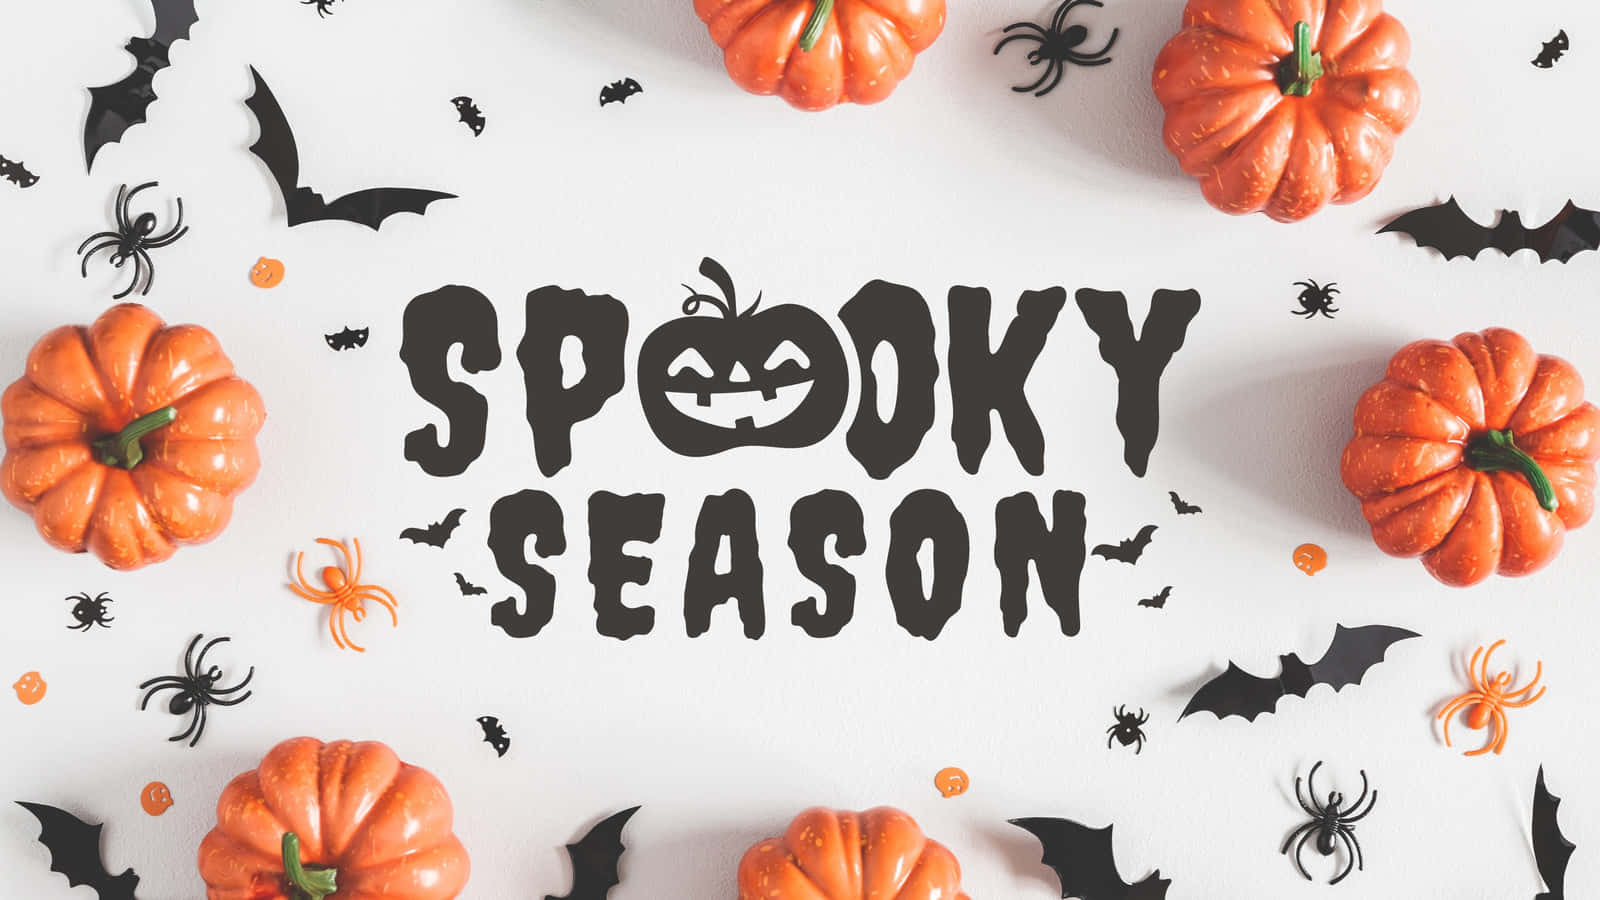 Download Spooky Season Flat Lay Aesthetic Creepy Halloween Background